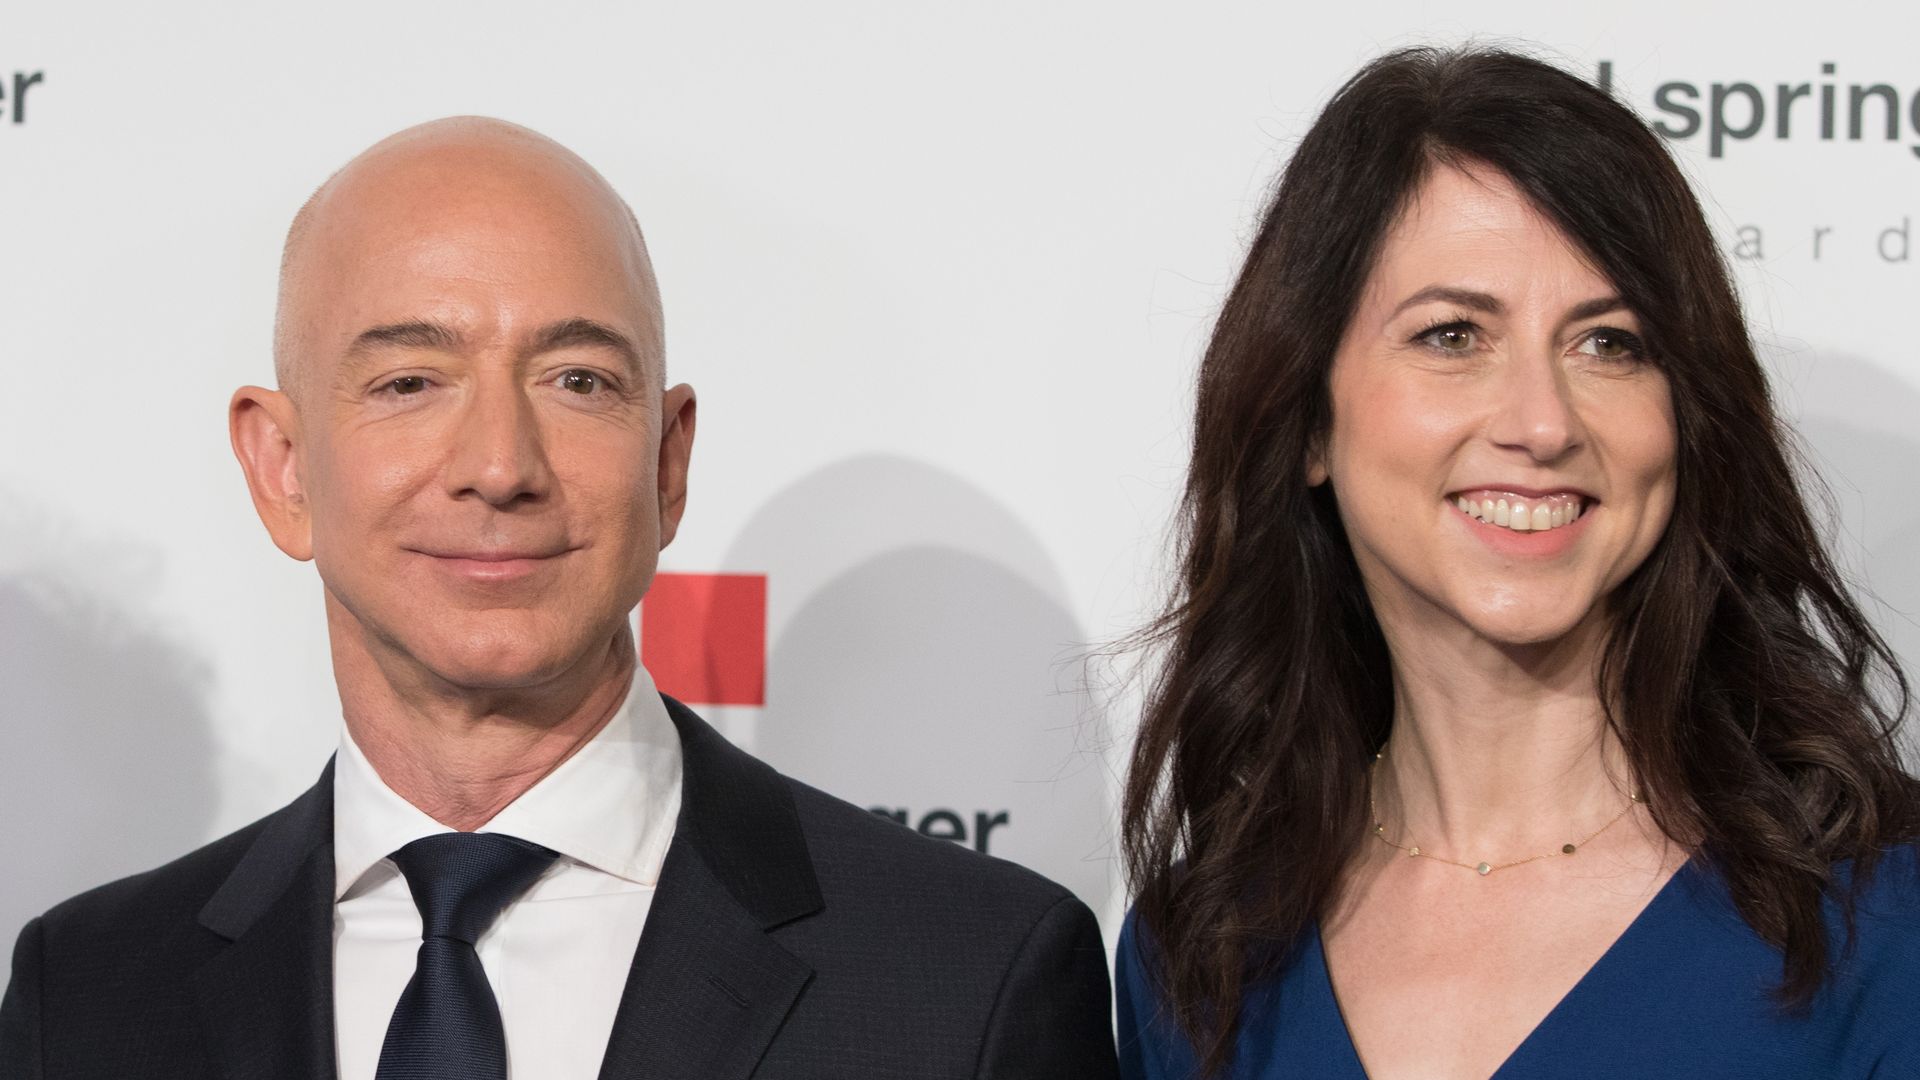 MacKenzie Scott with her former husband, Jeff Bezos, the CEO of Amazon.